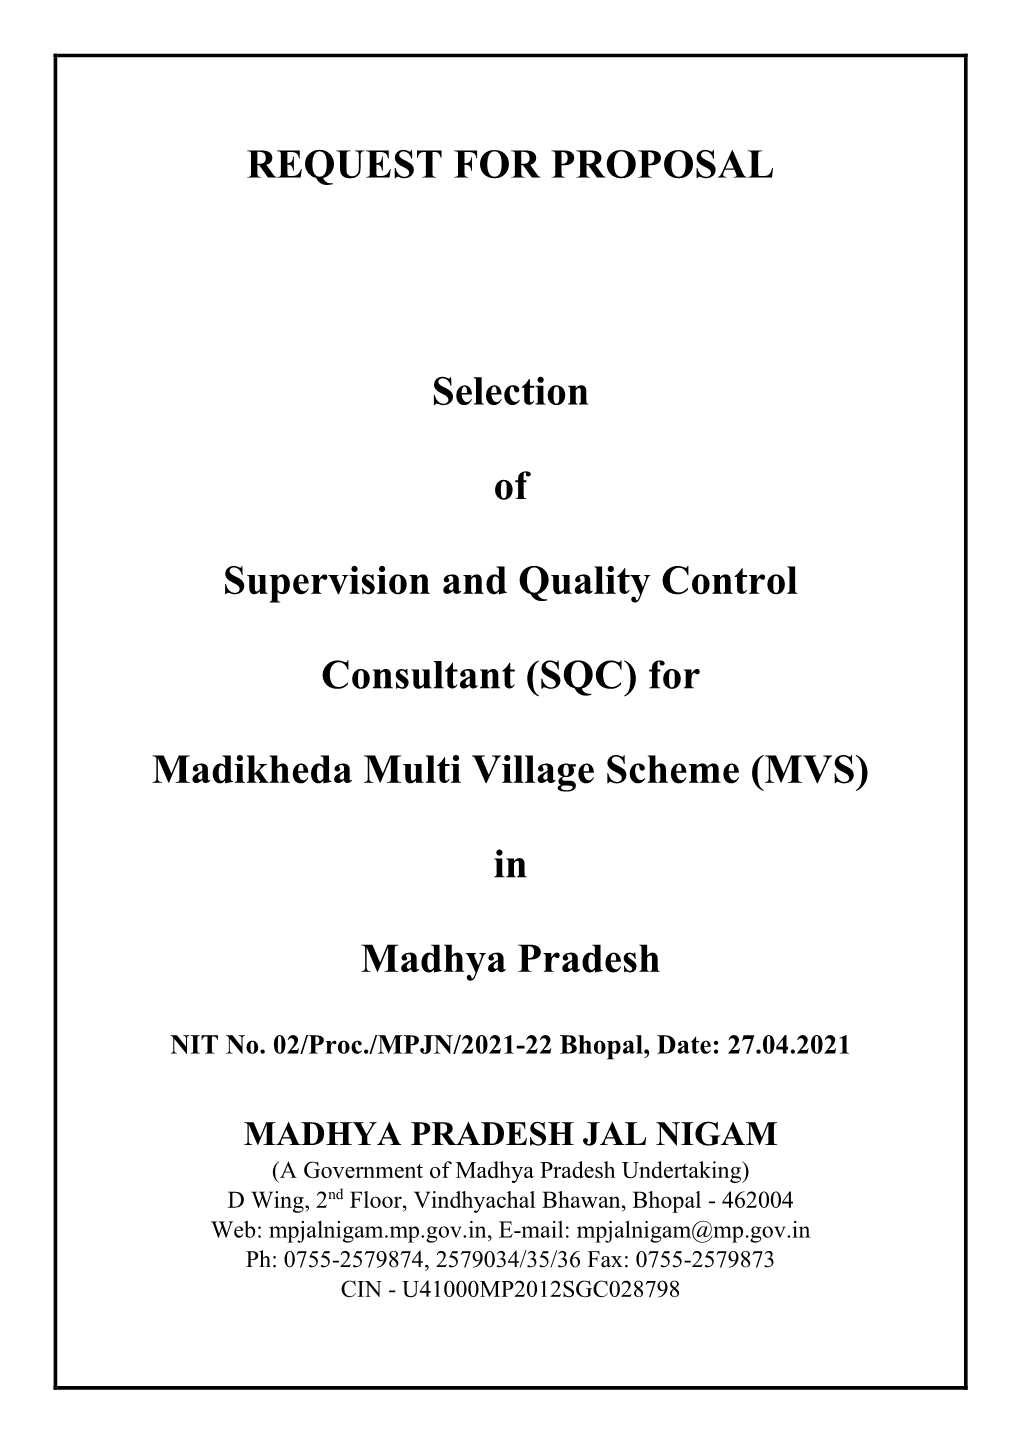 (SQC) for Madikheda Multi Village Scheme (MVS) in Madhya Pradesh